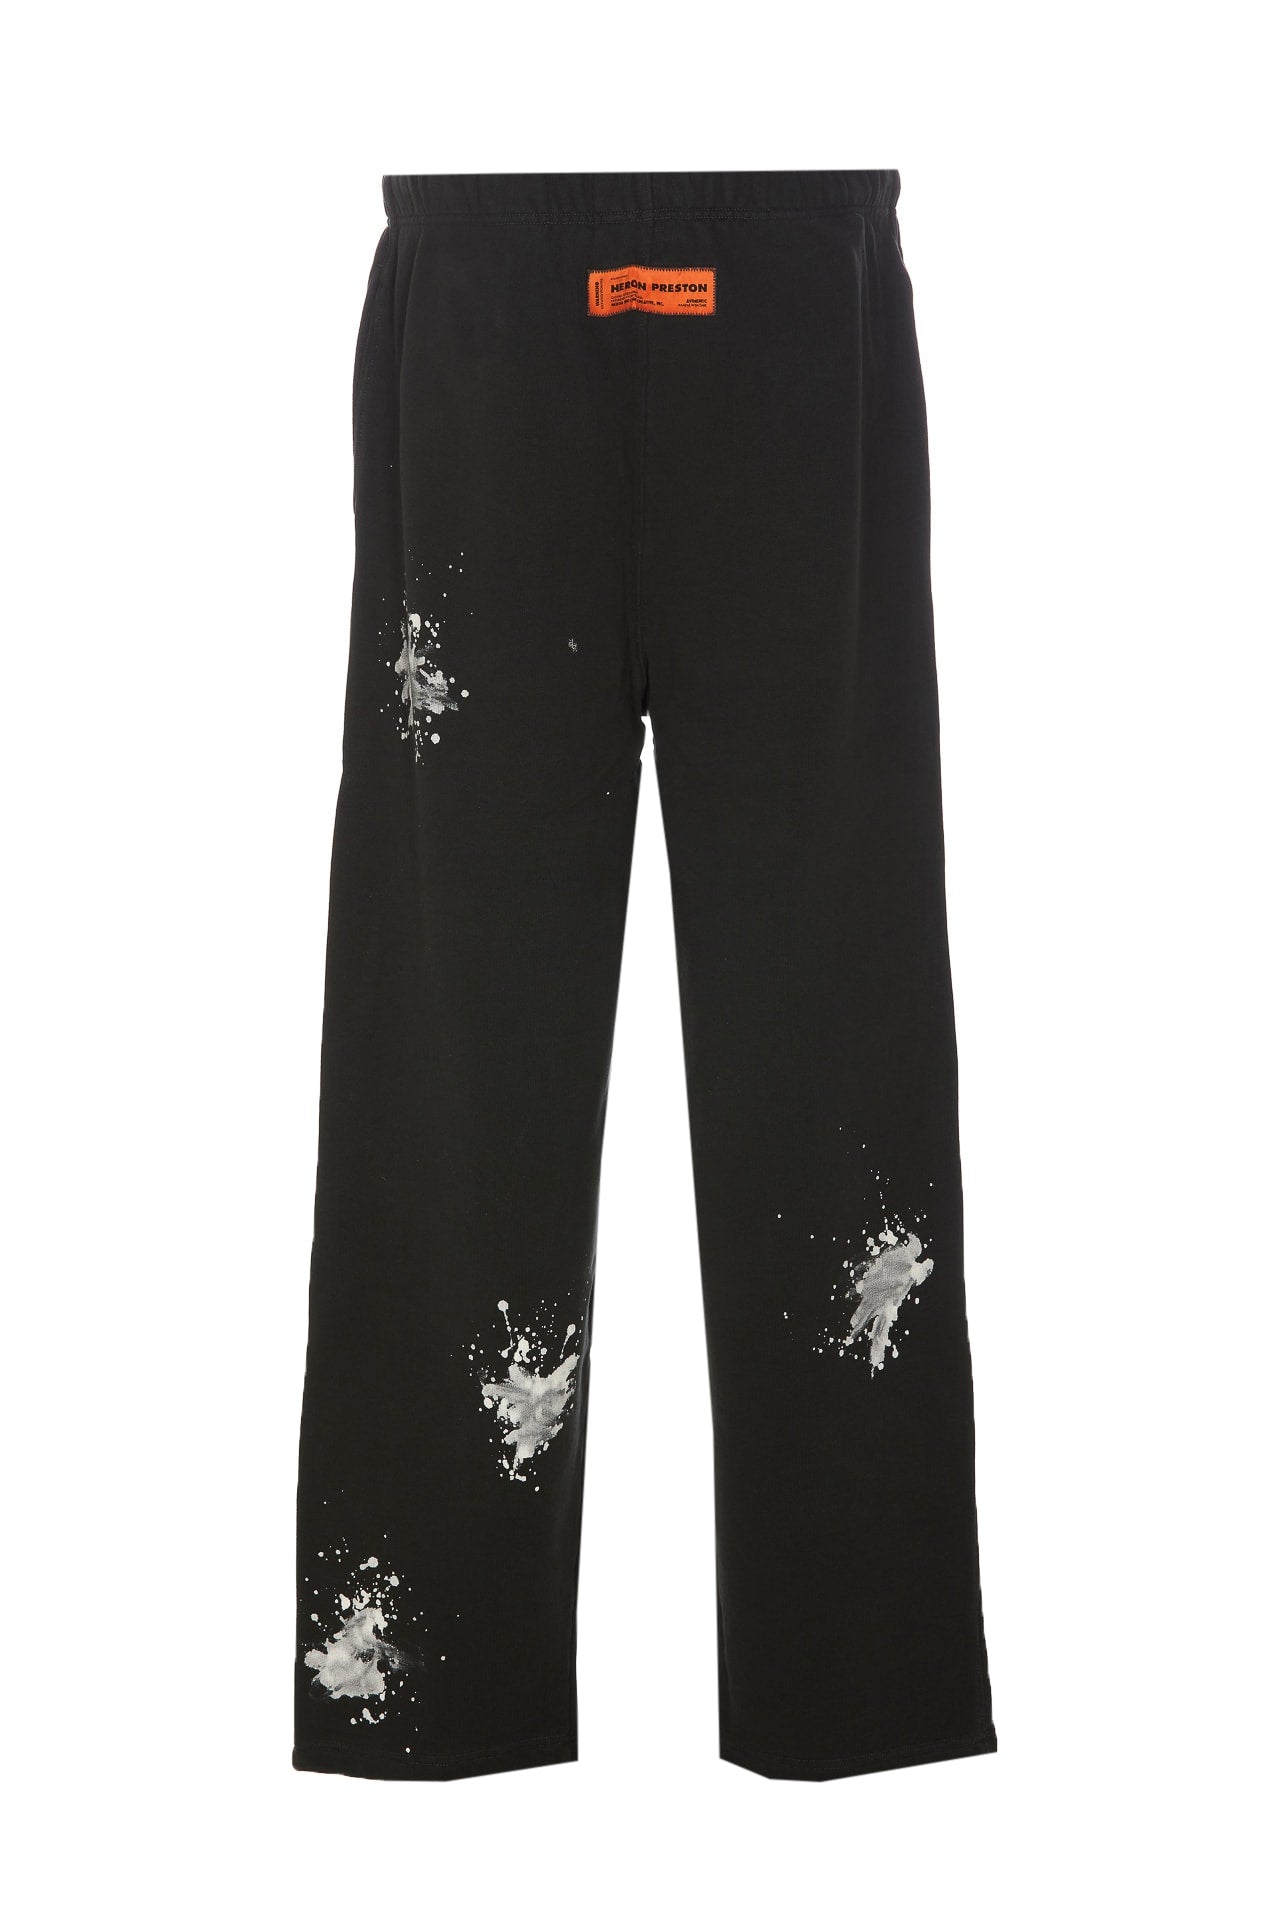 Heron Preston paint-splatter cotton track trousers